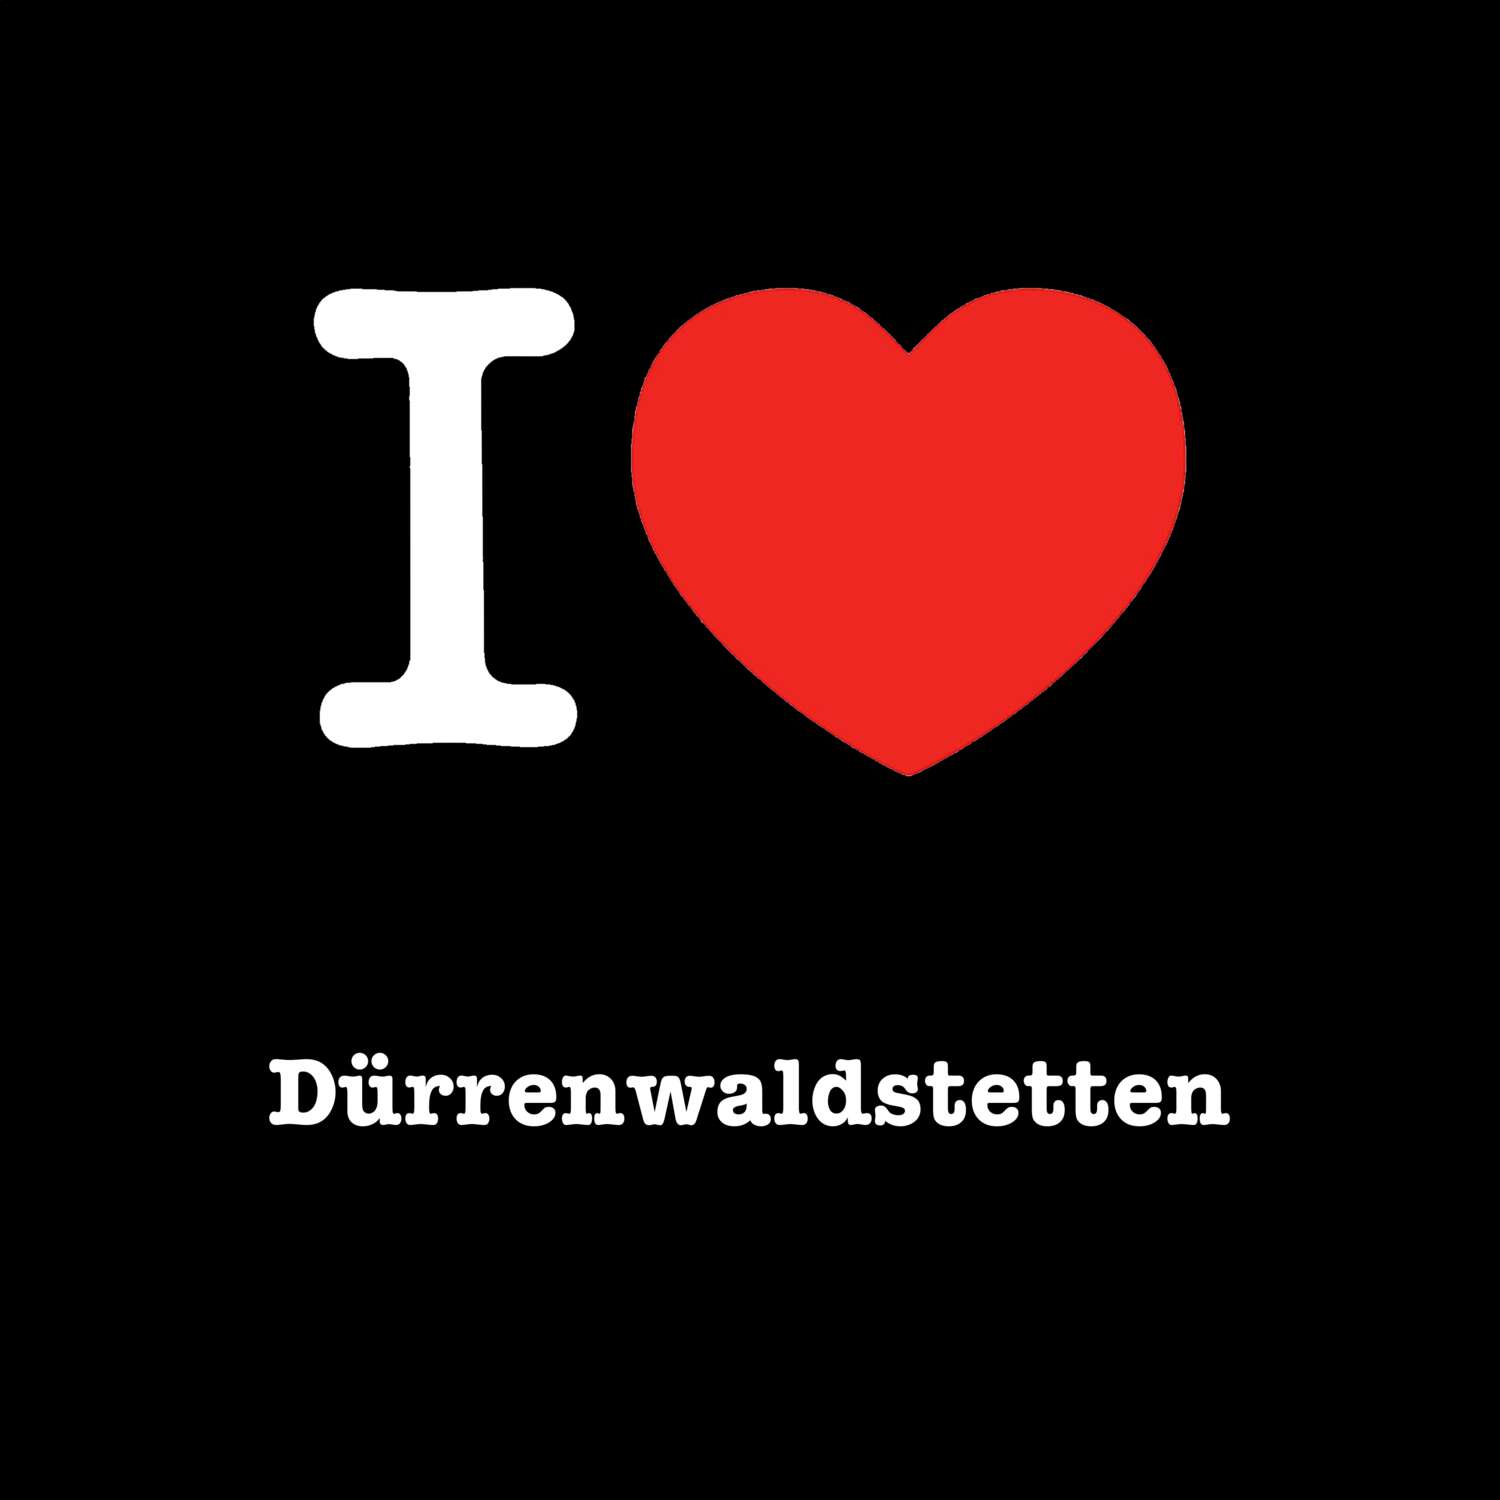 Dürrenwaldstetten T-Shirt »I love«